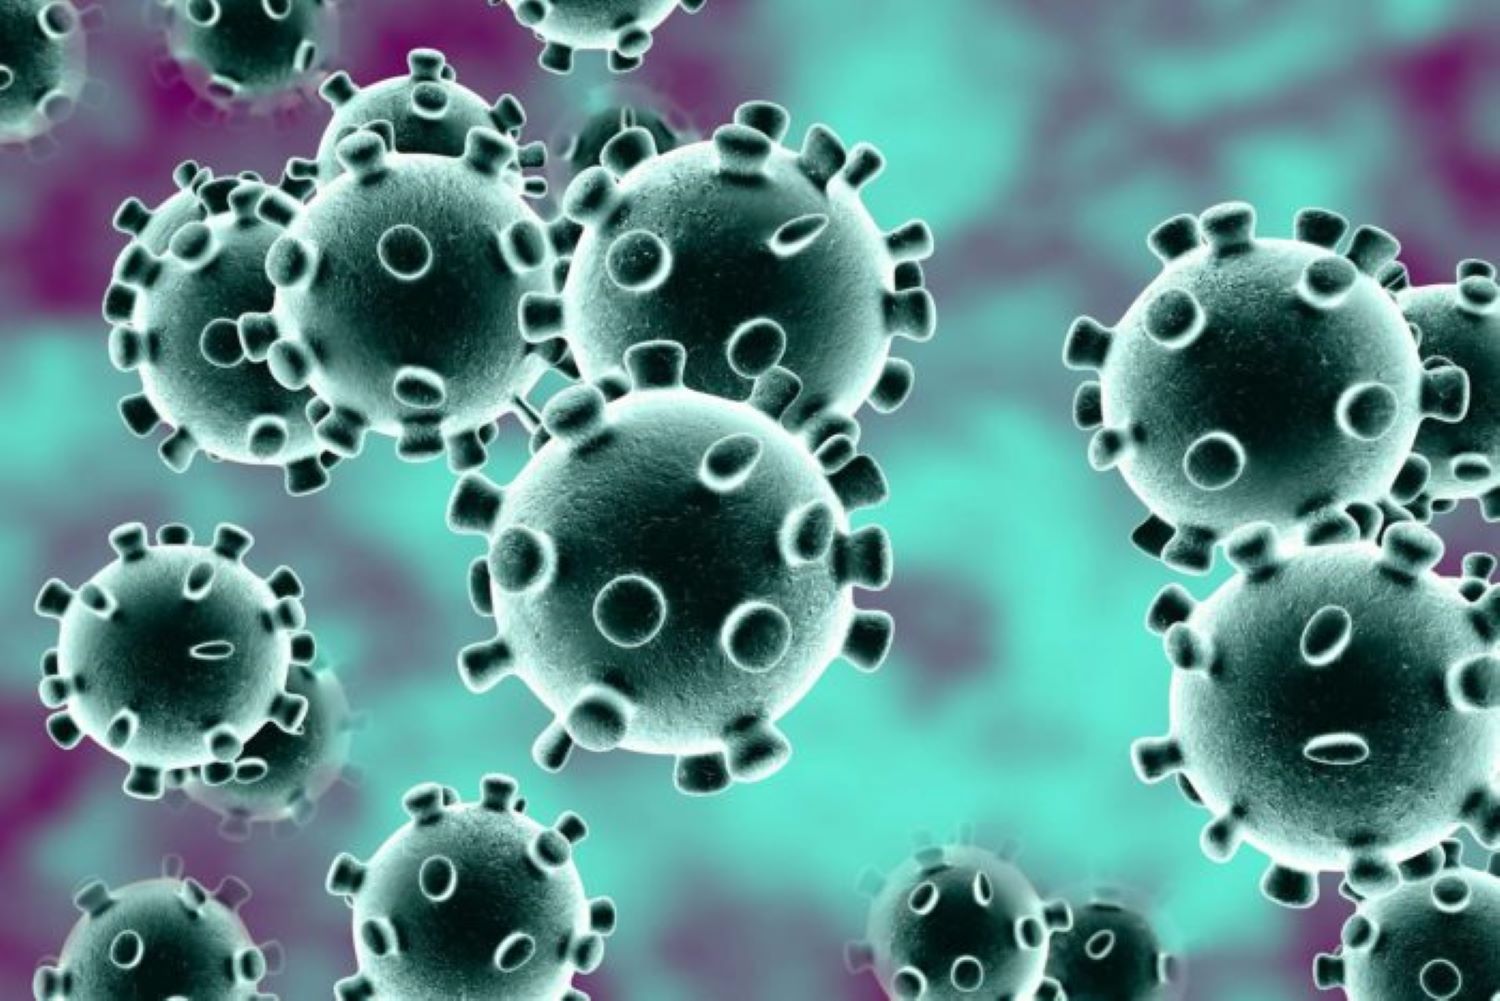 Coronavirus: NCDC advises on how to keep safe